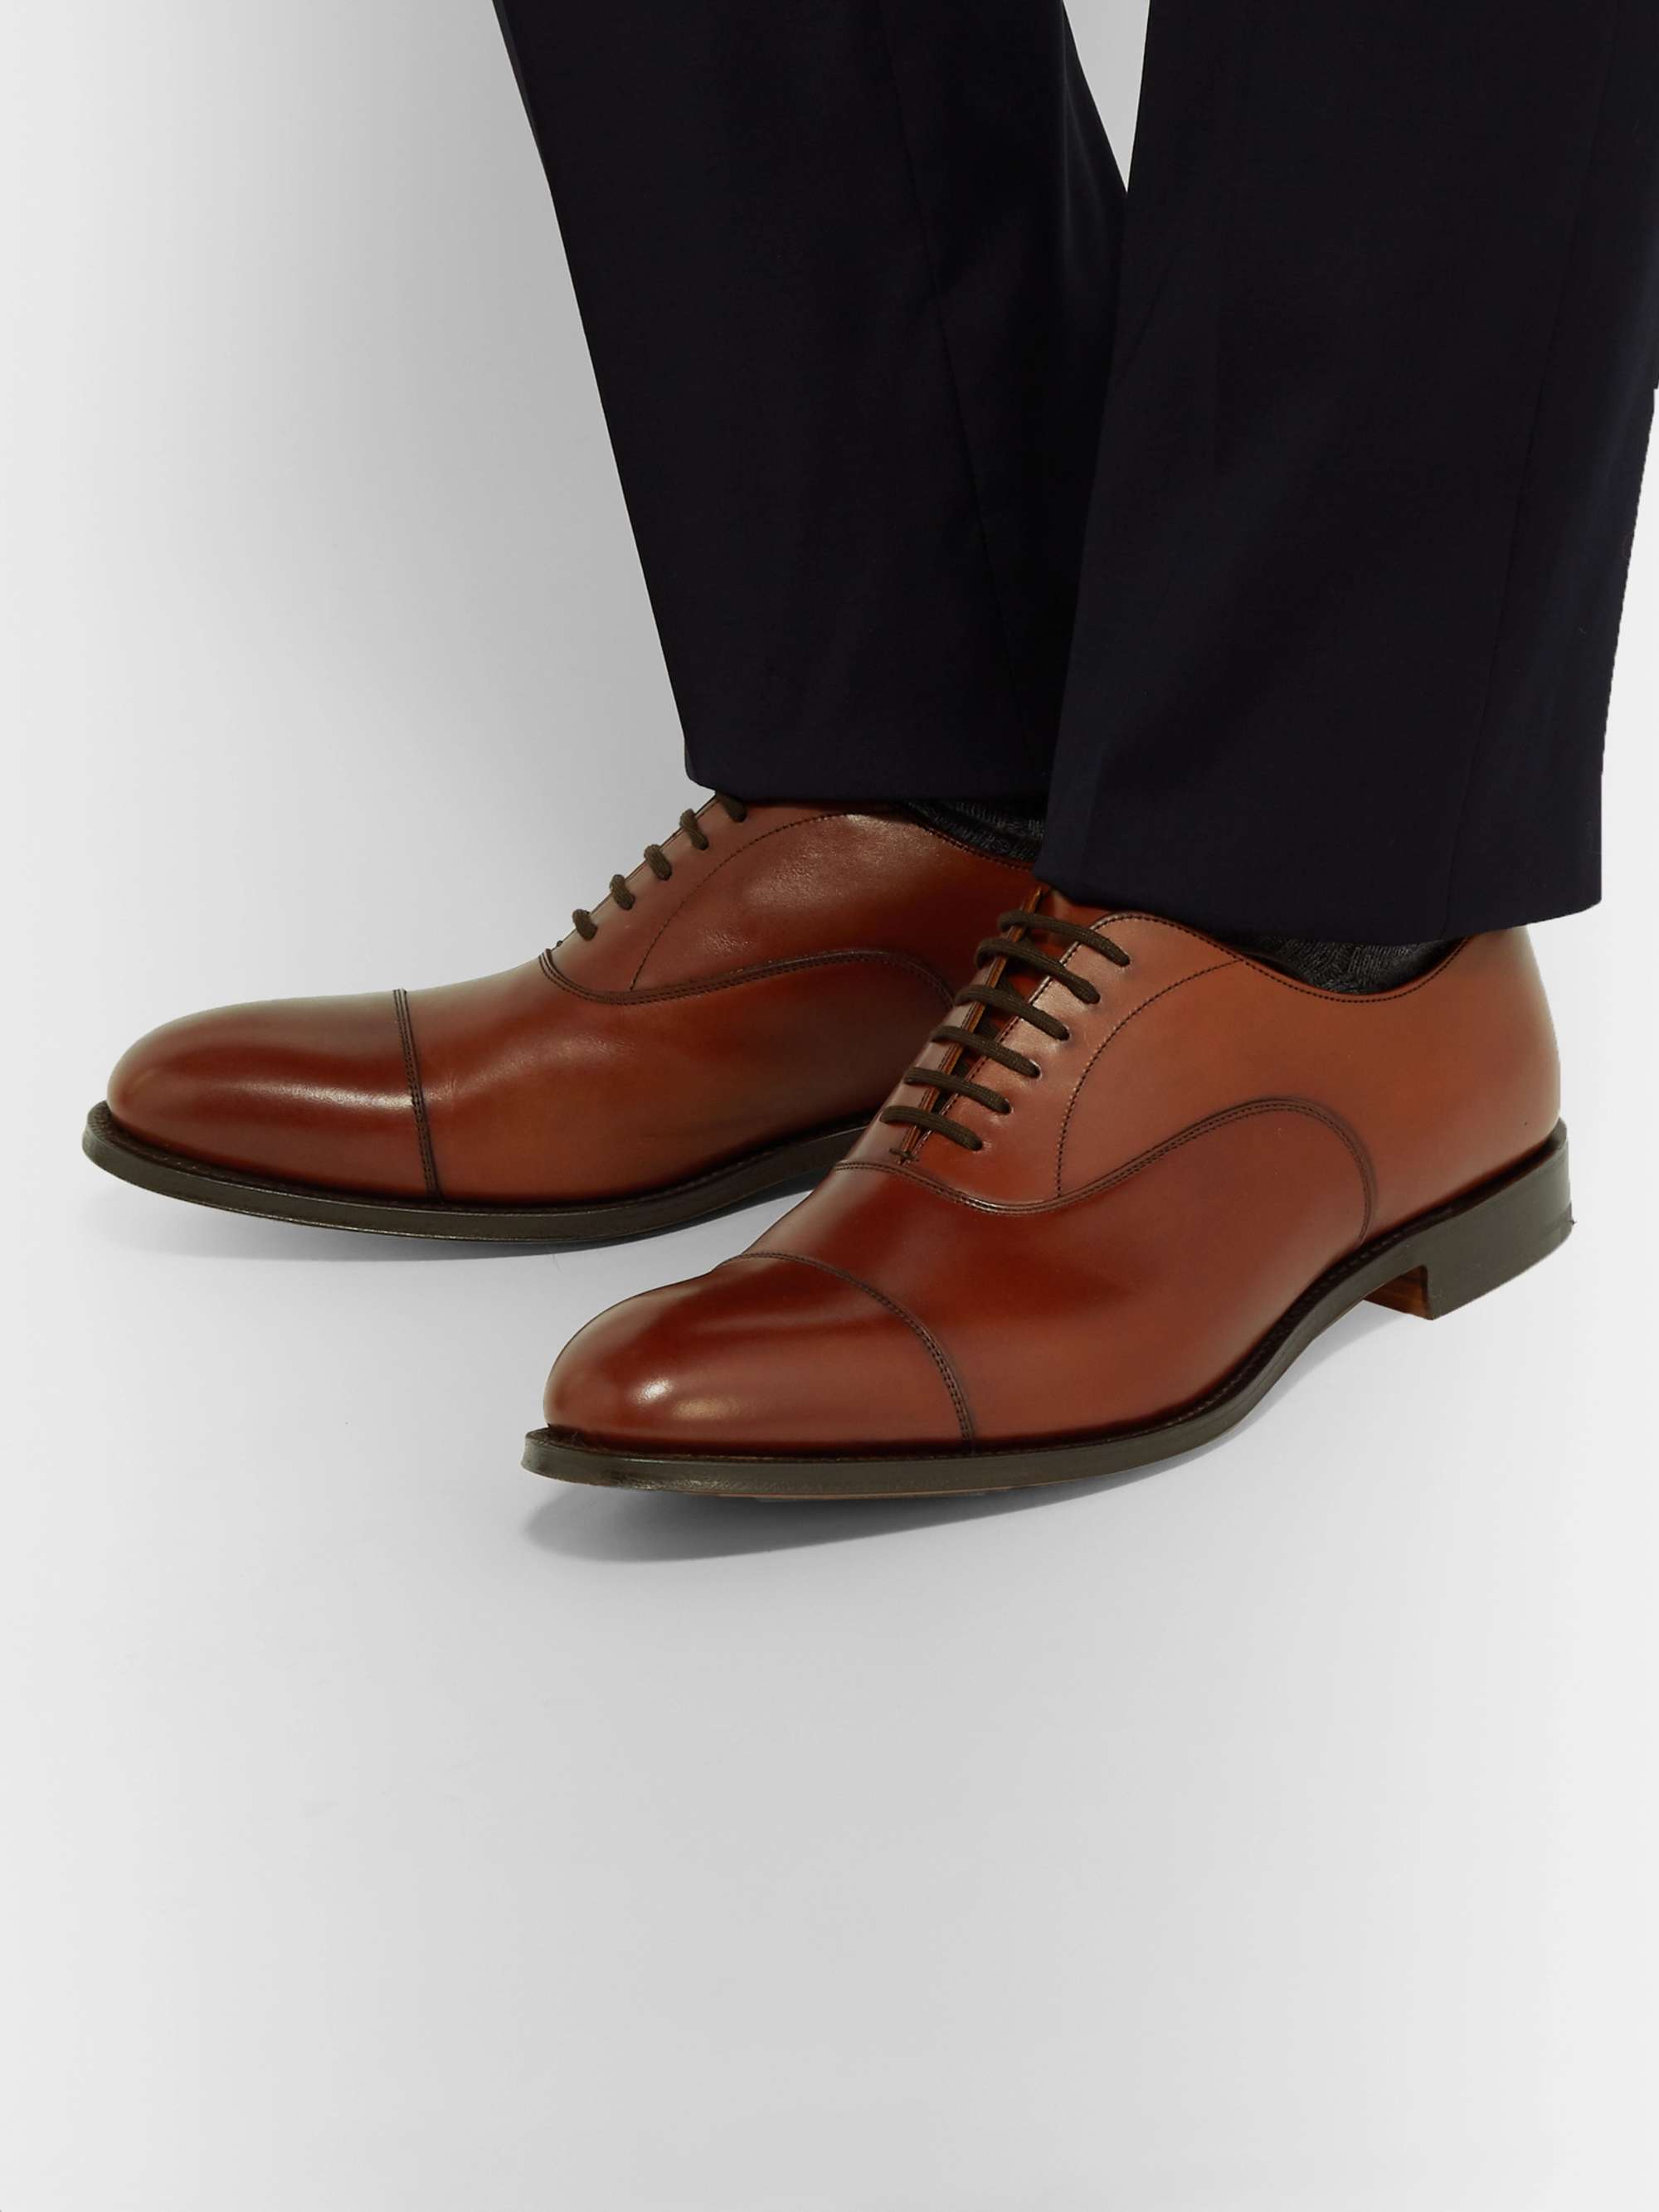 CHURCH'S Dubai Polished-Leather Oxford Shoes | MR PORTER